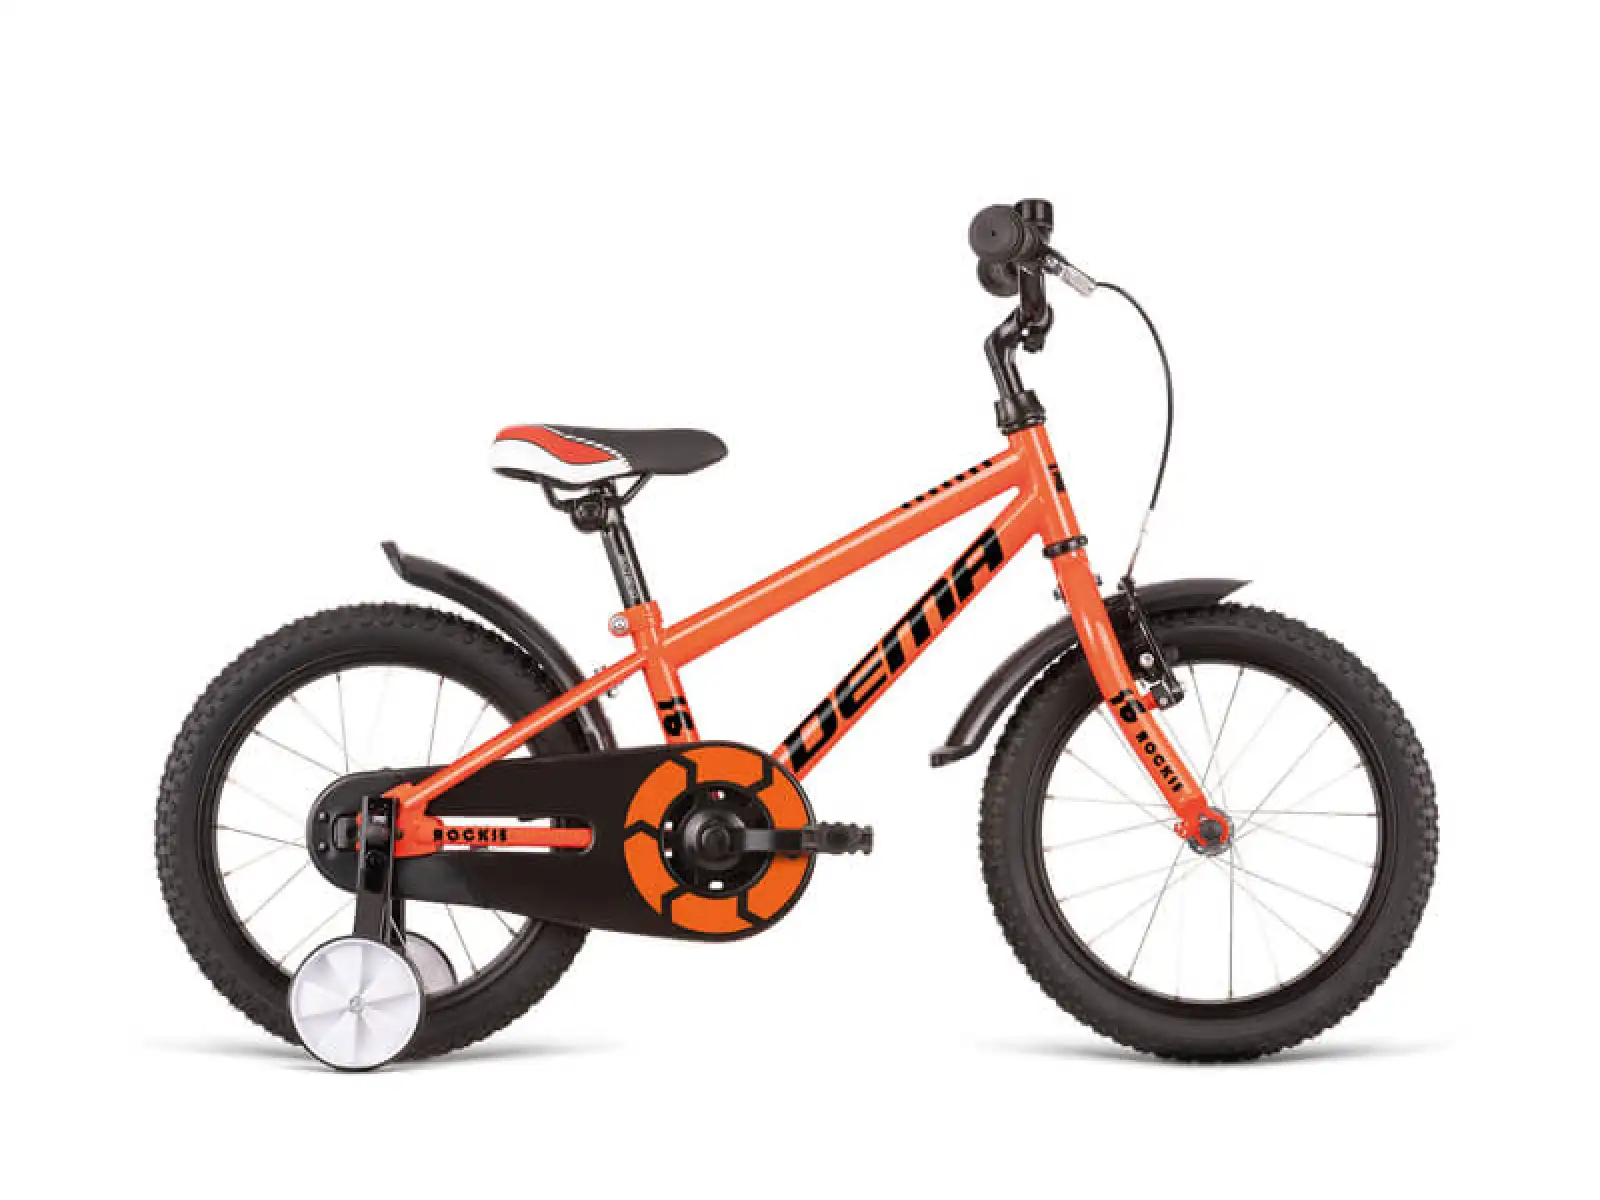 Dema Rockie 16 Junior 1 Speed 2021 oranžový detský bicykel